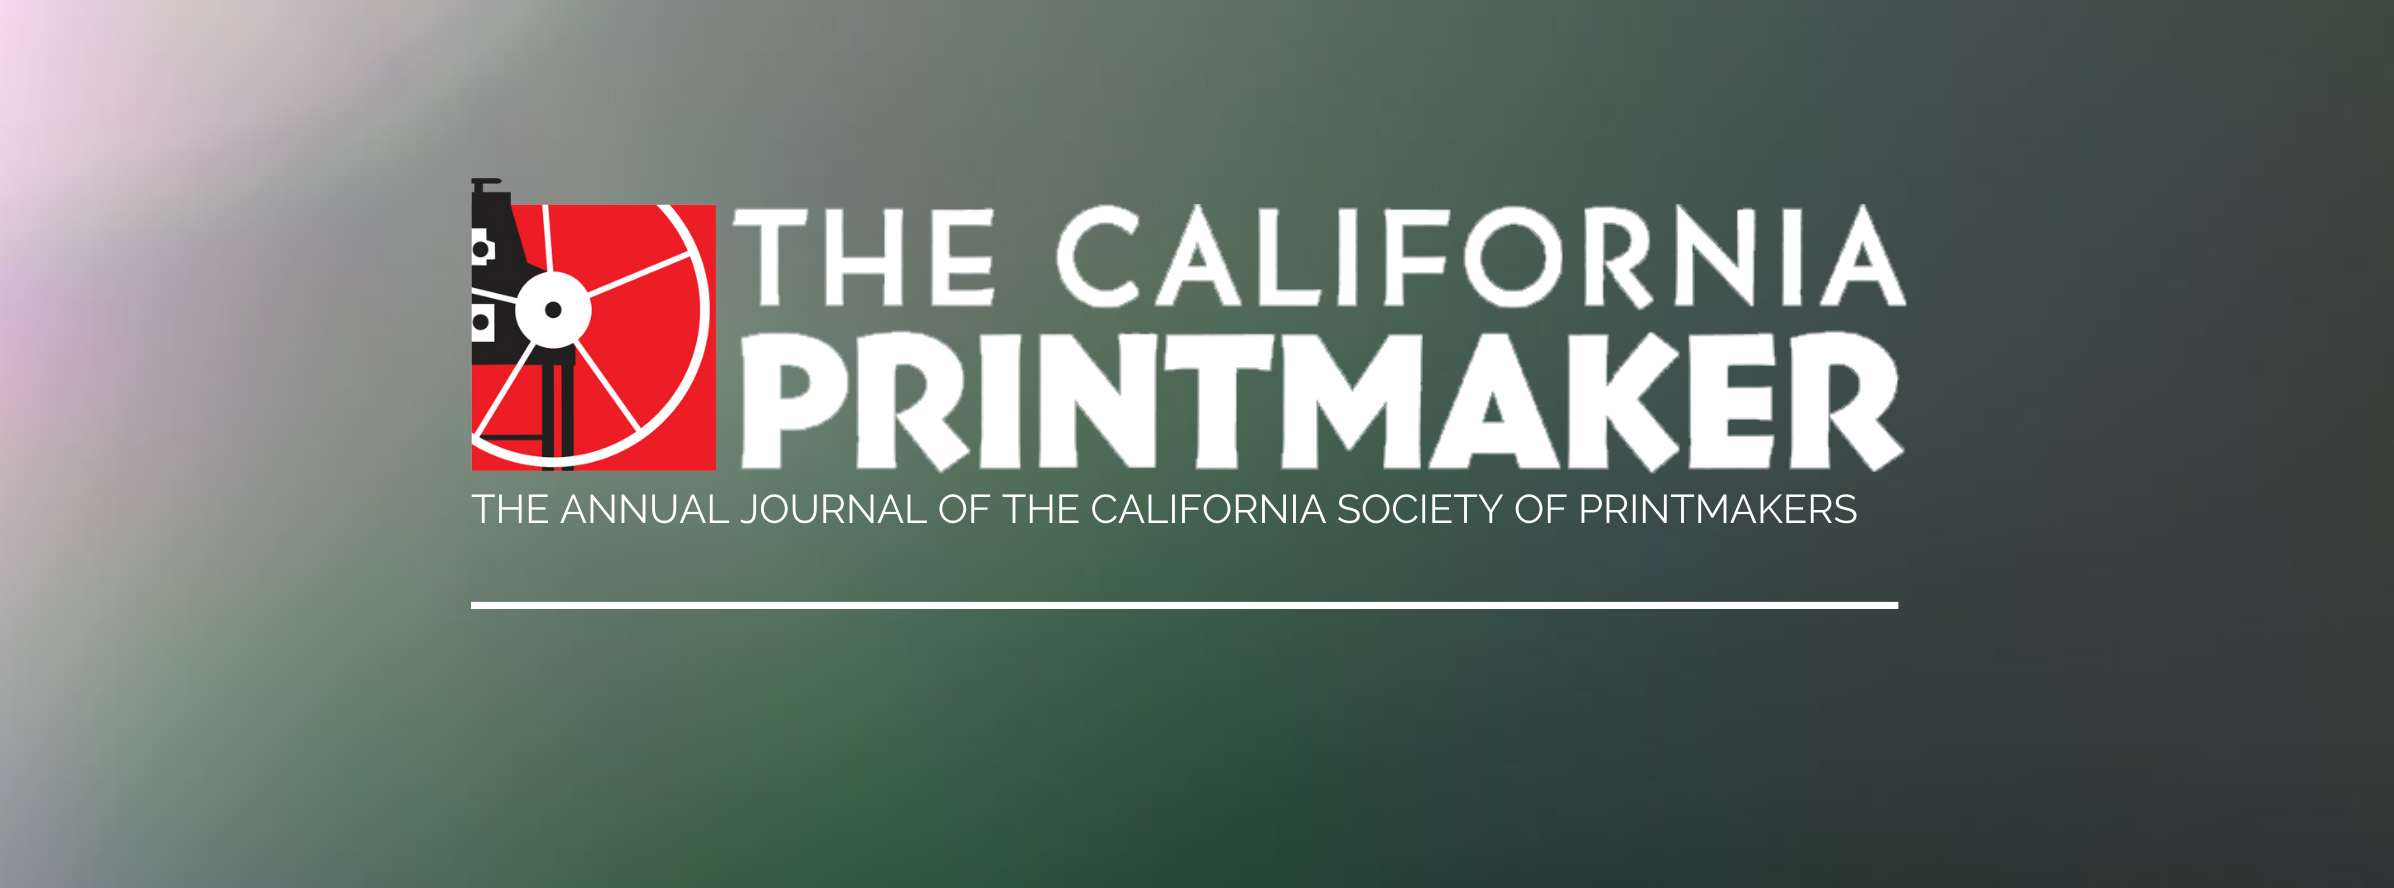 The California Printmaker, Journal of the California Society of Printmakers